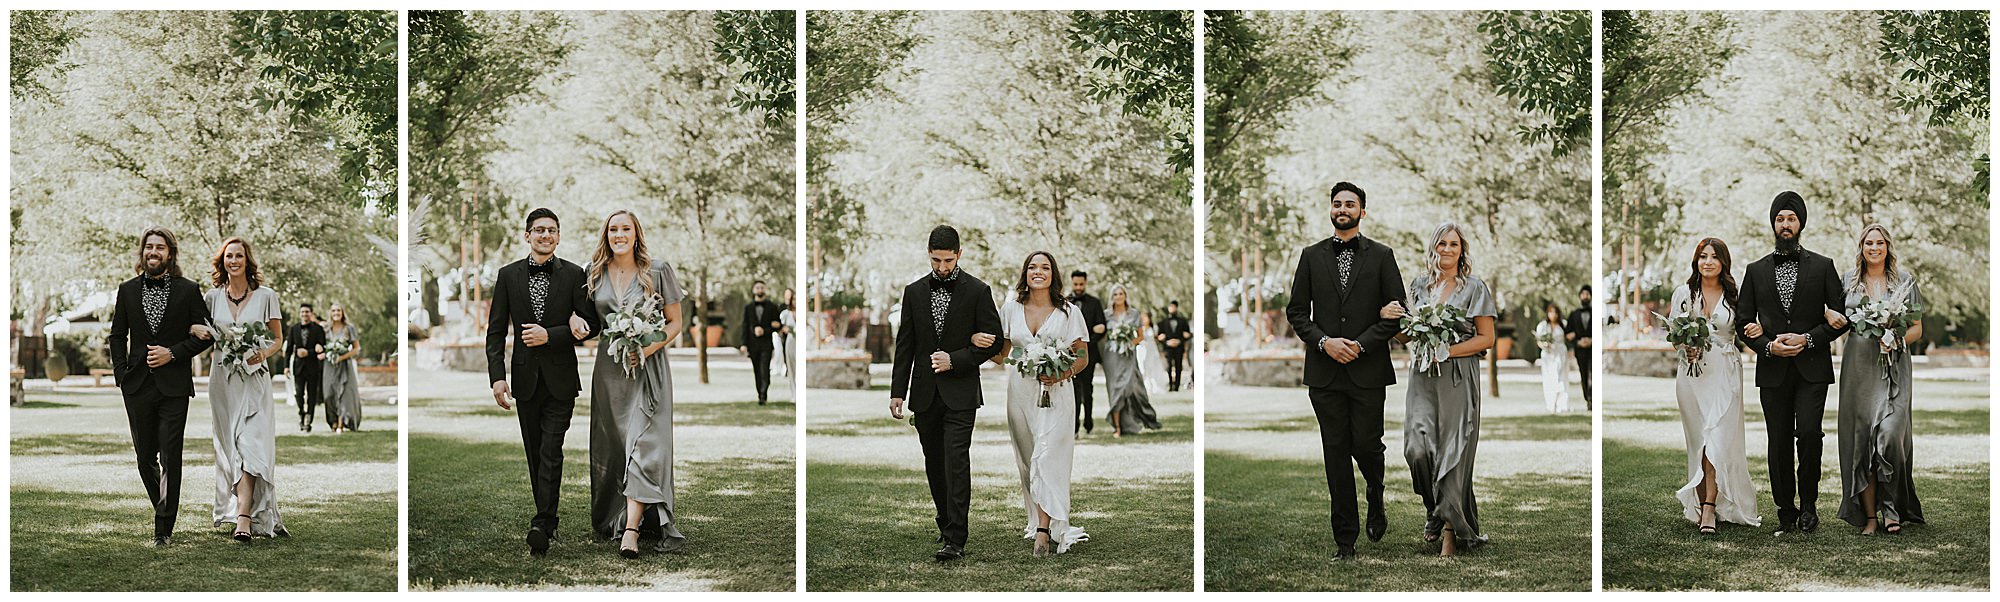 Cardella Winery Wedding Photos by Toni G Photo #tonigphoto_0033